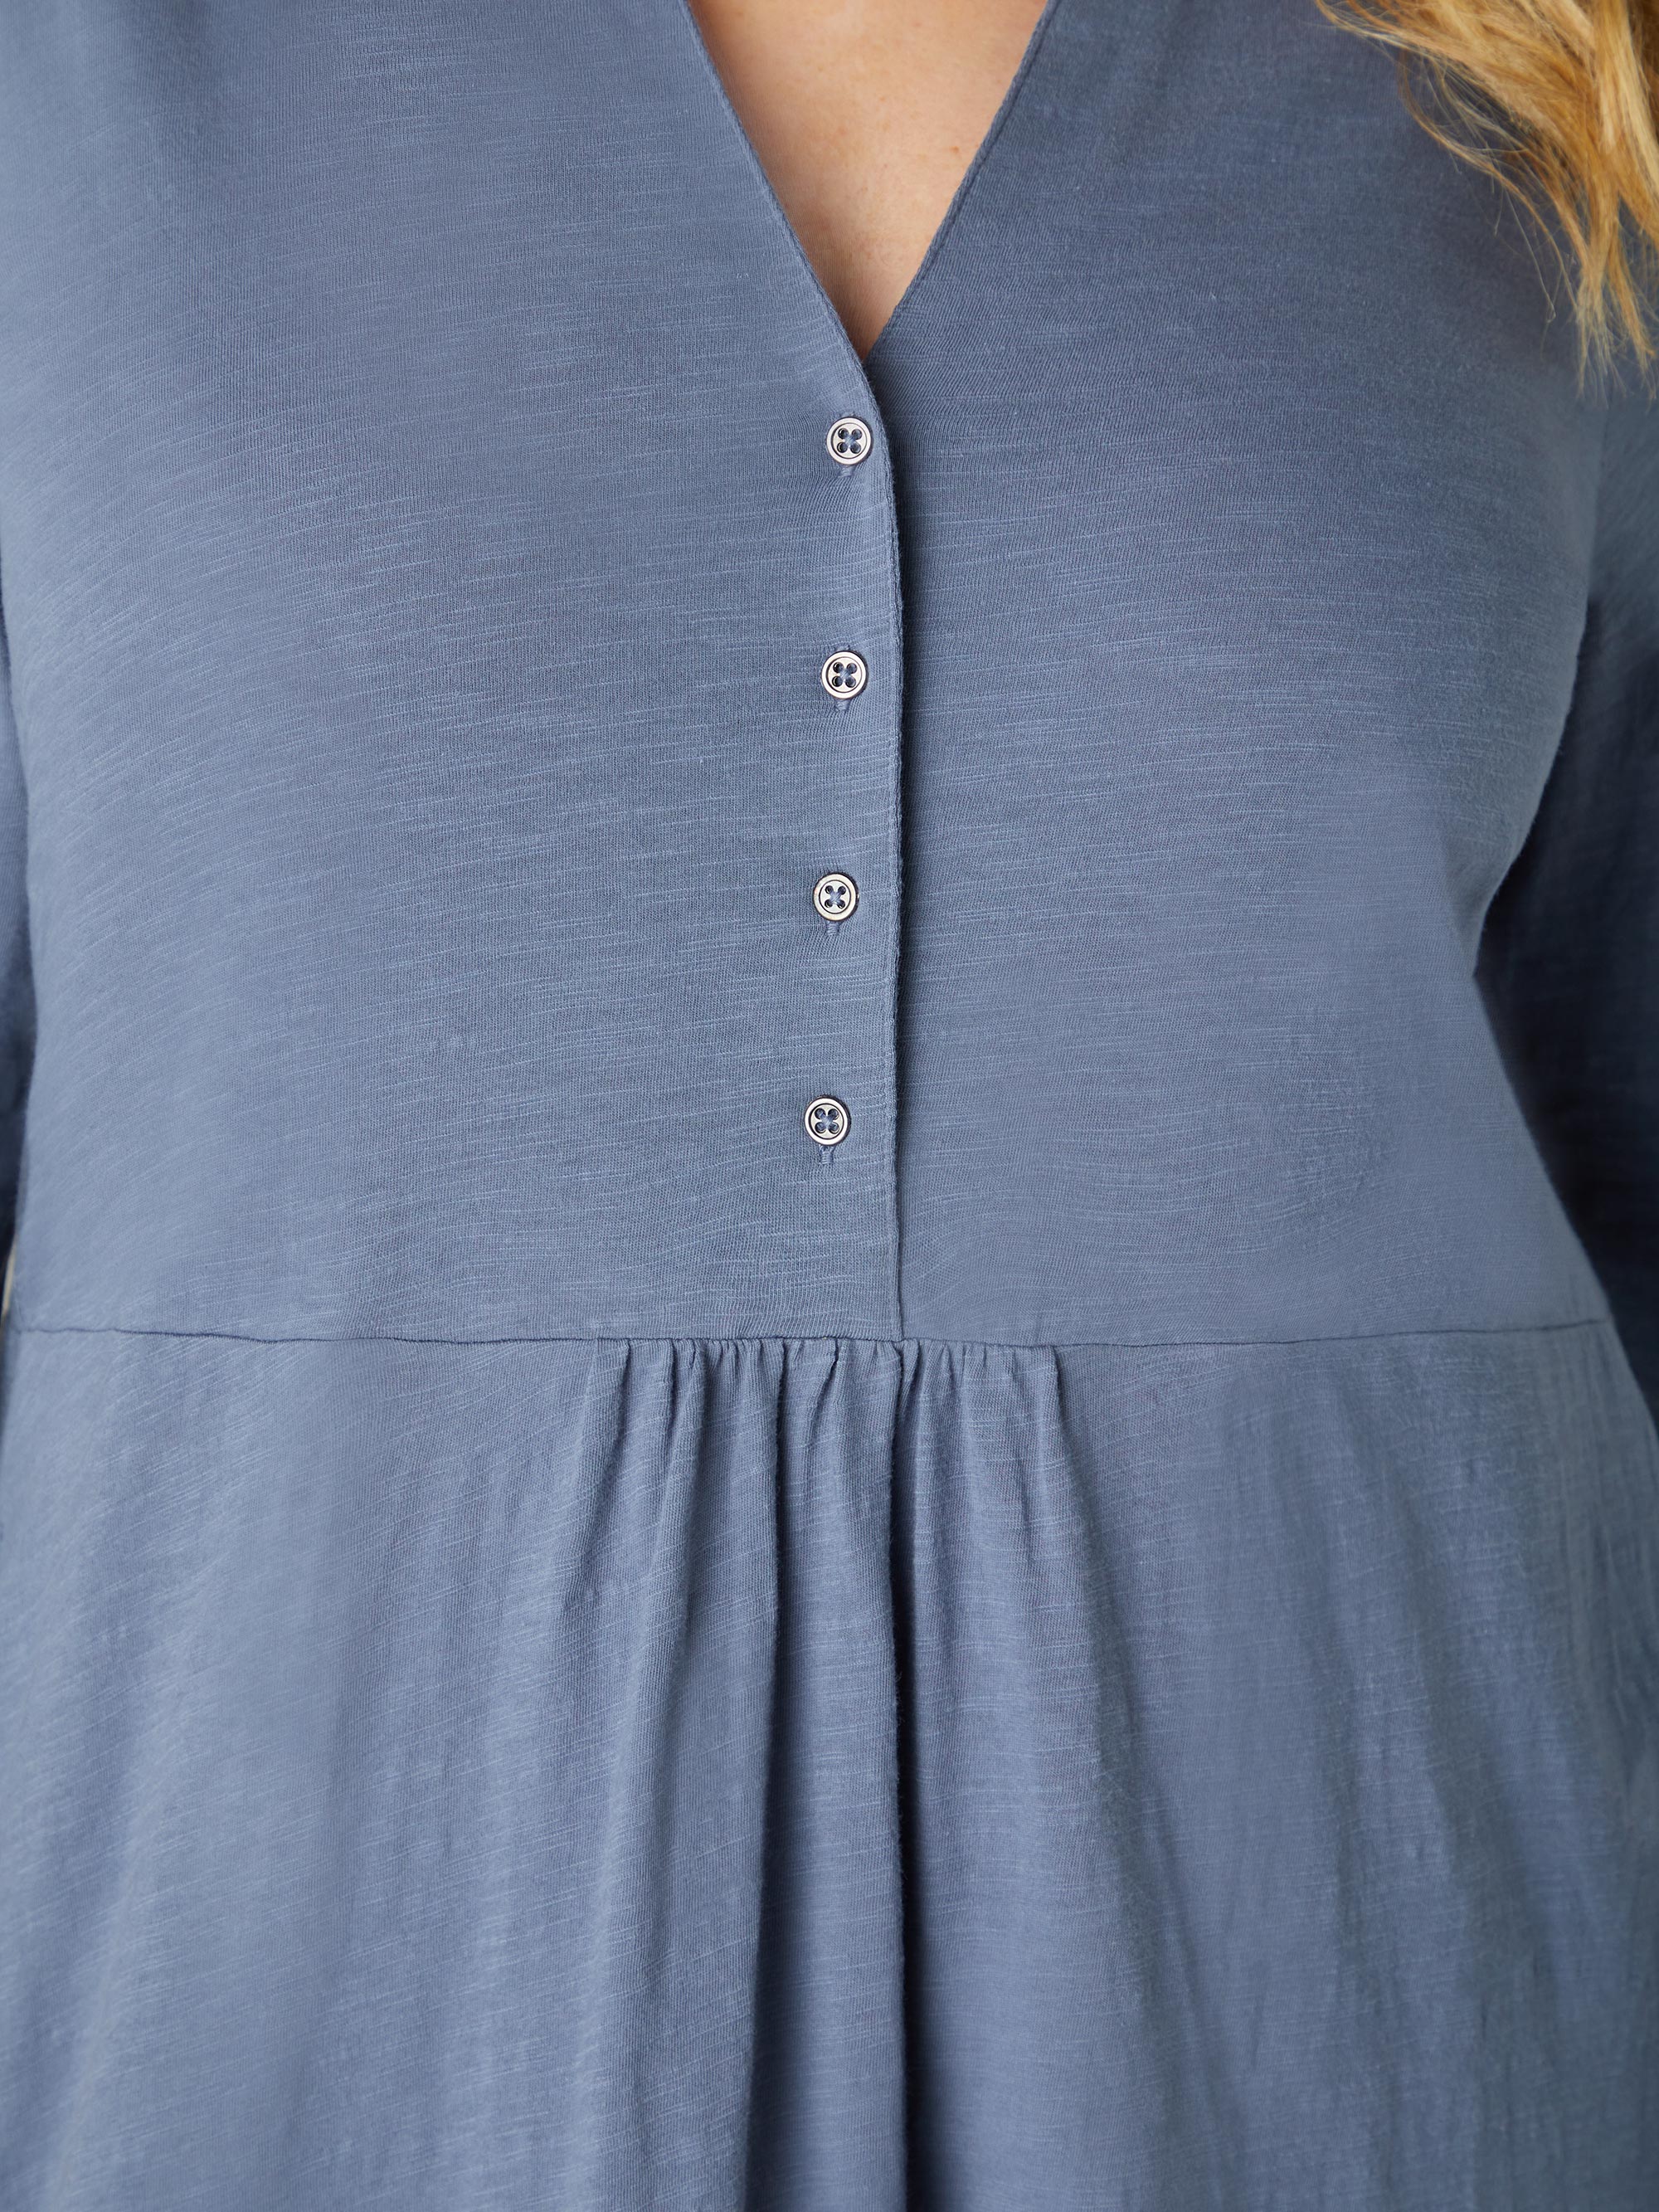 Blue Cotton Slub Button Front Midi Dress